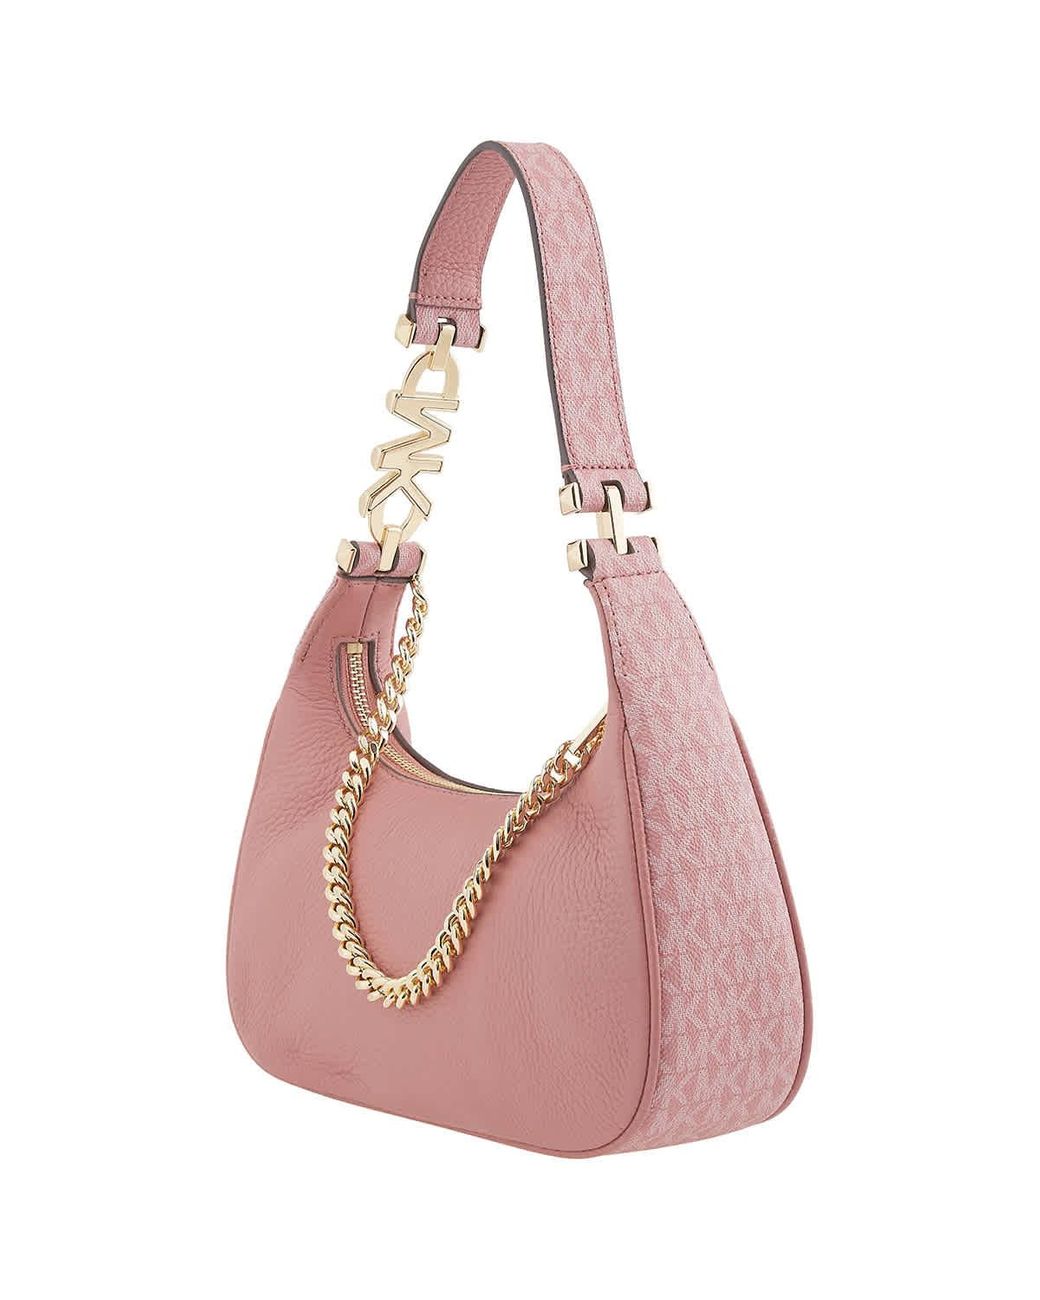 MICHAEL KORS: Chantal grained leather bag - Pink | MICHAEL KORS mini bag  32R3G7CC3T online at GIGLIO.COM